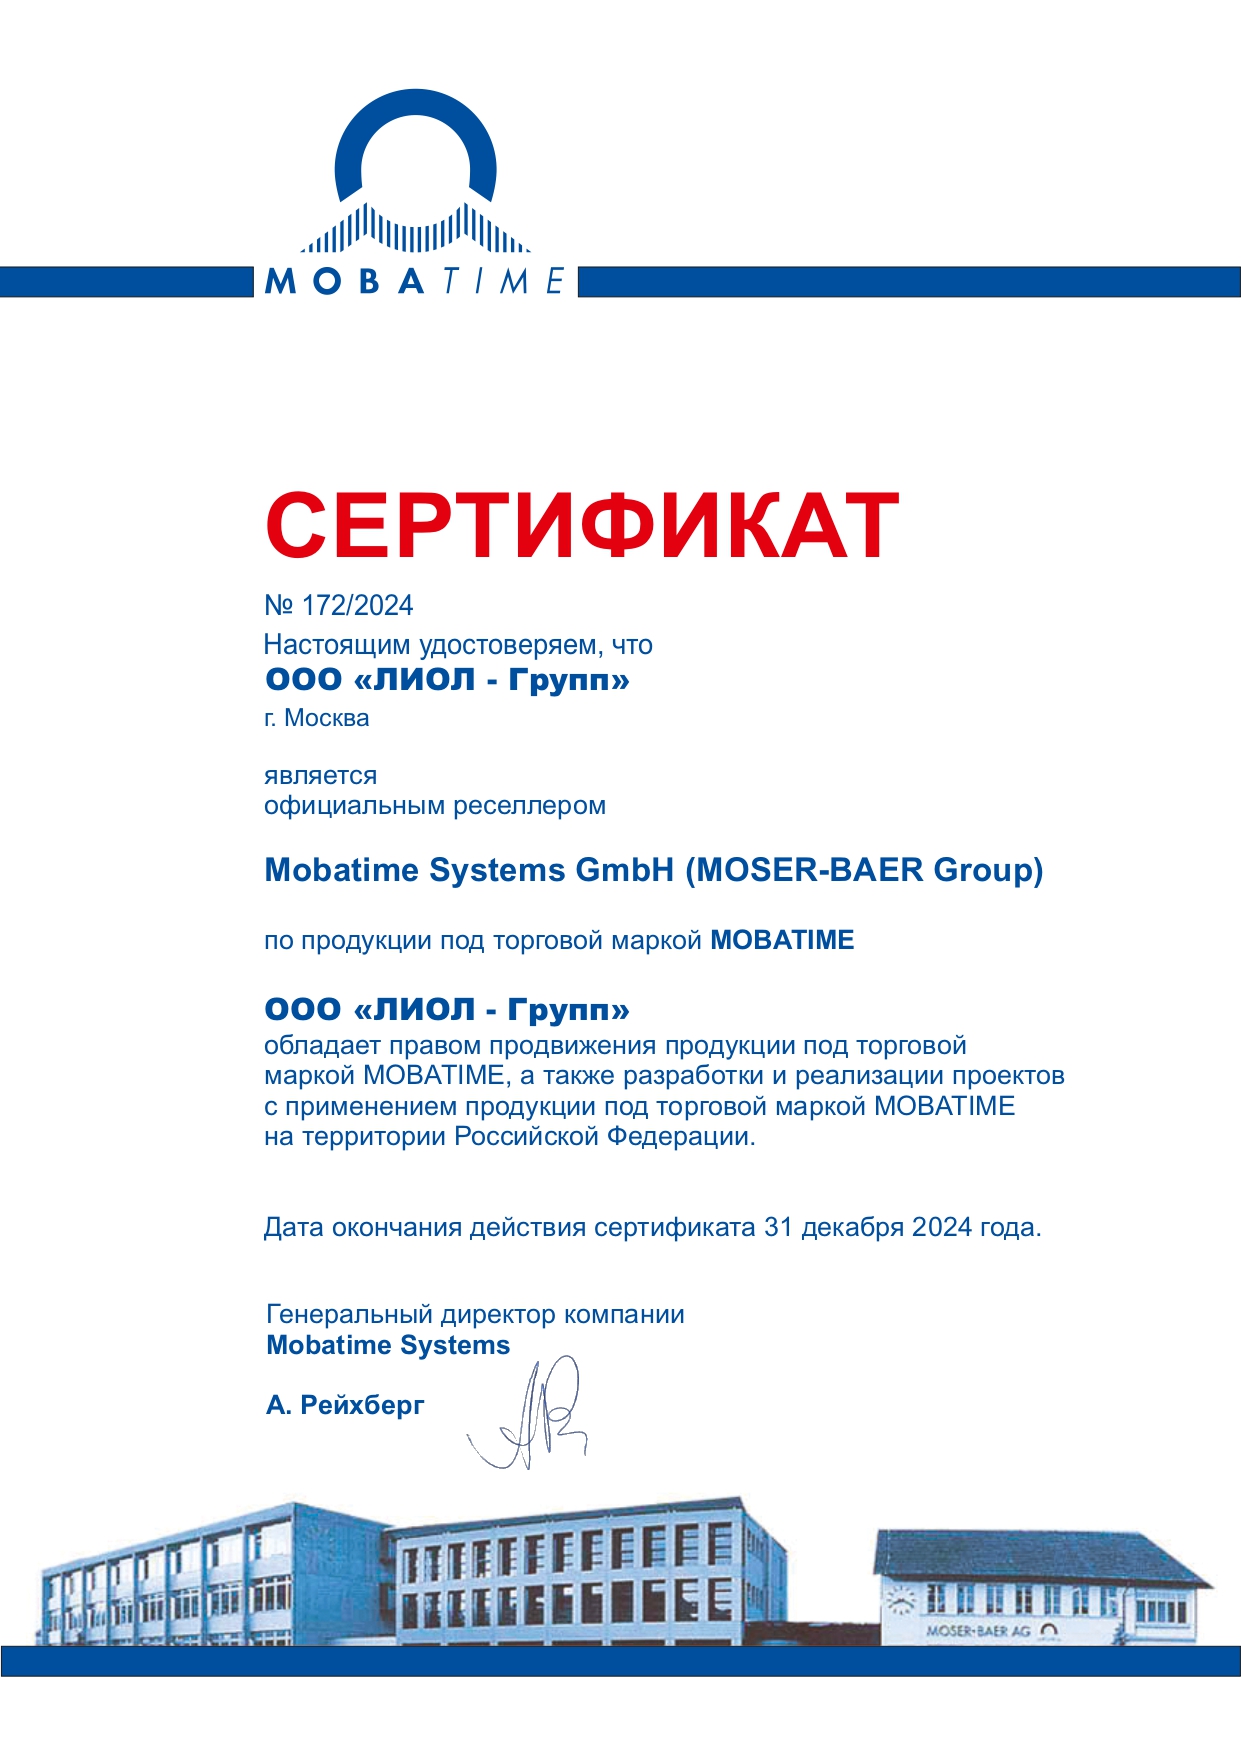 Сертификаты фирмы Mobatime Systems